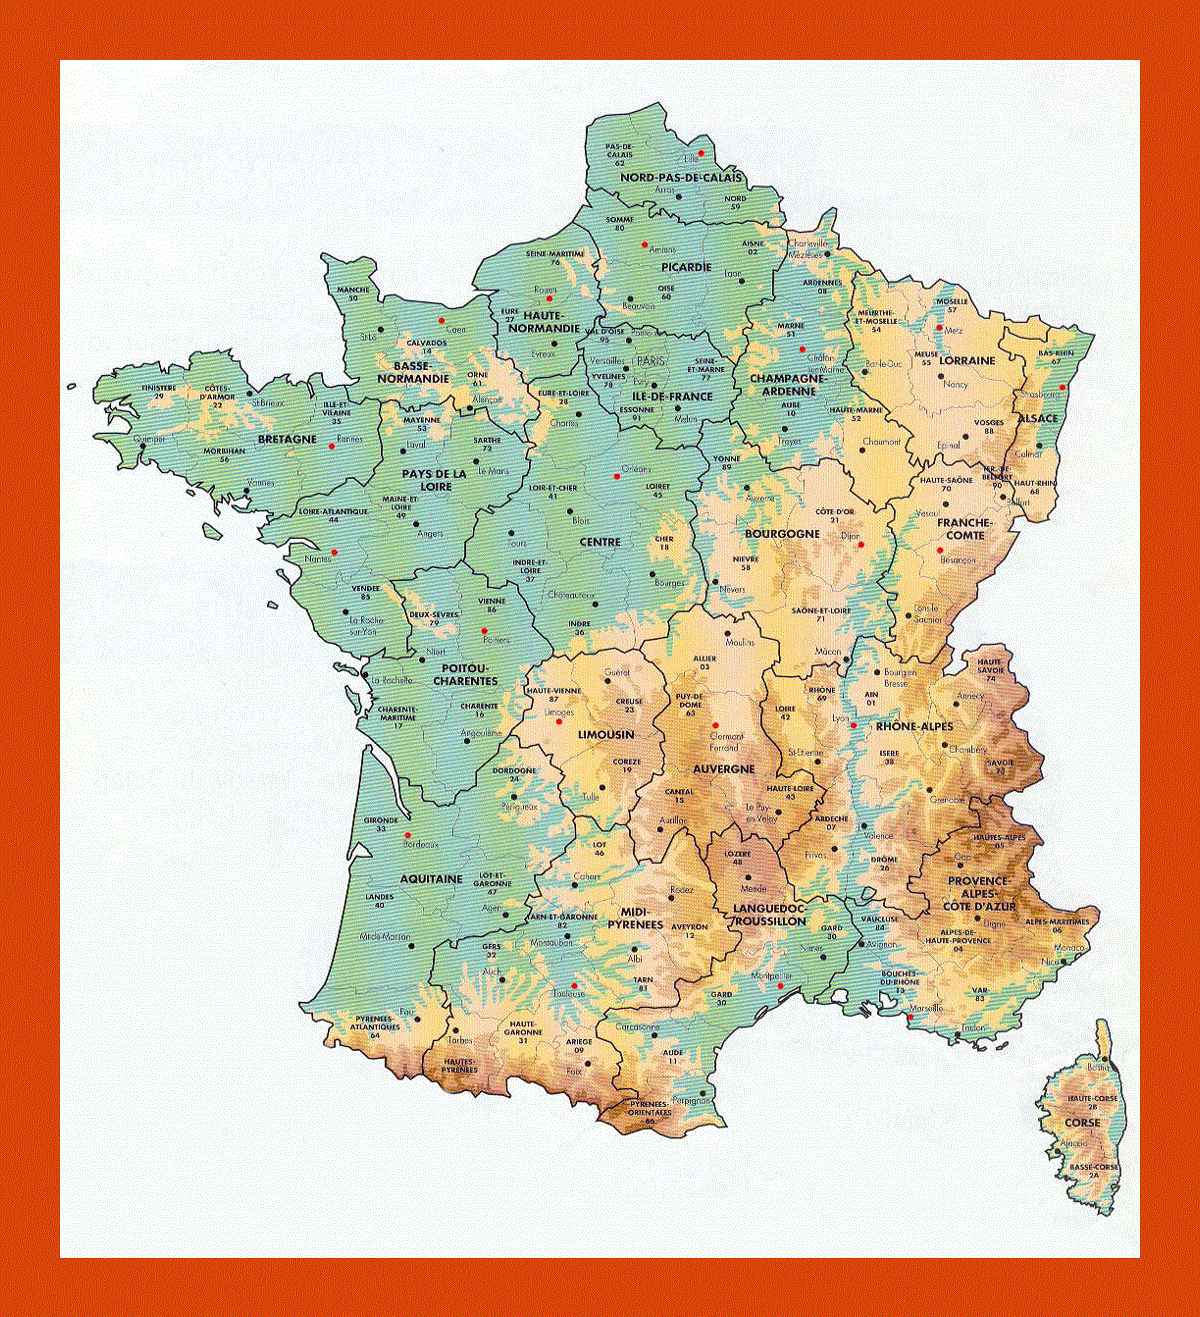 Elevation map of France